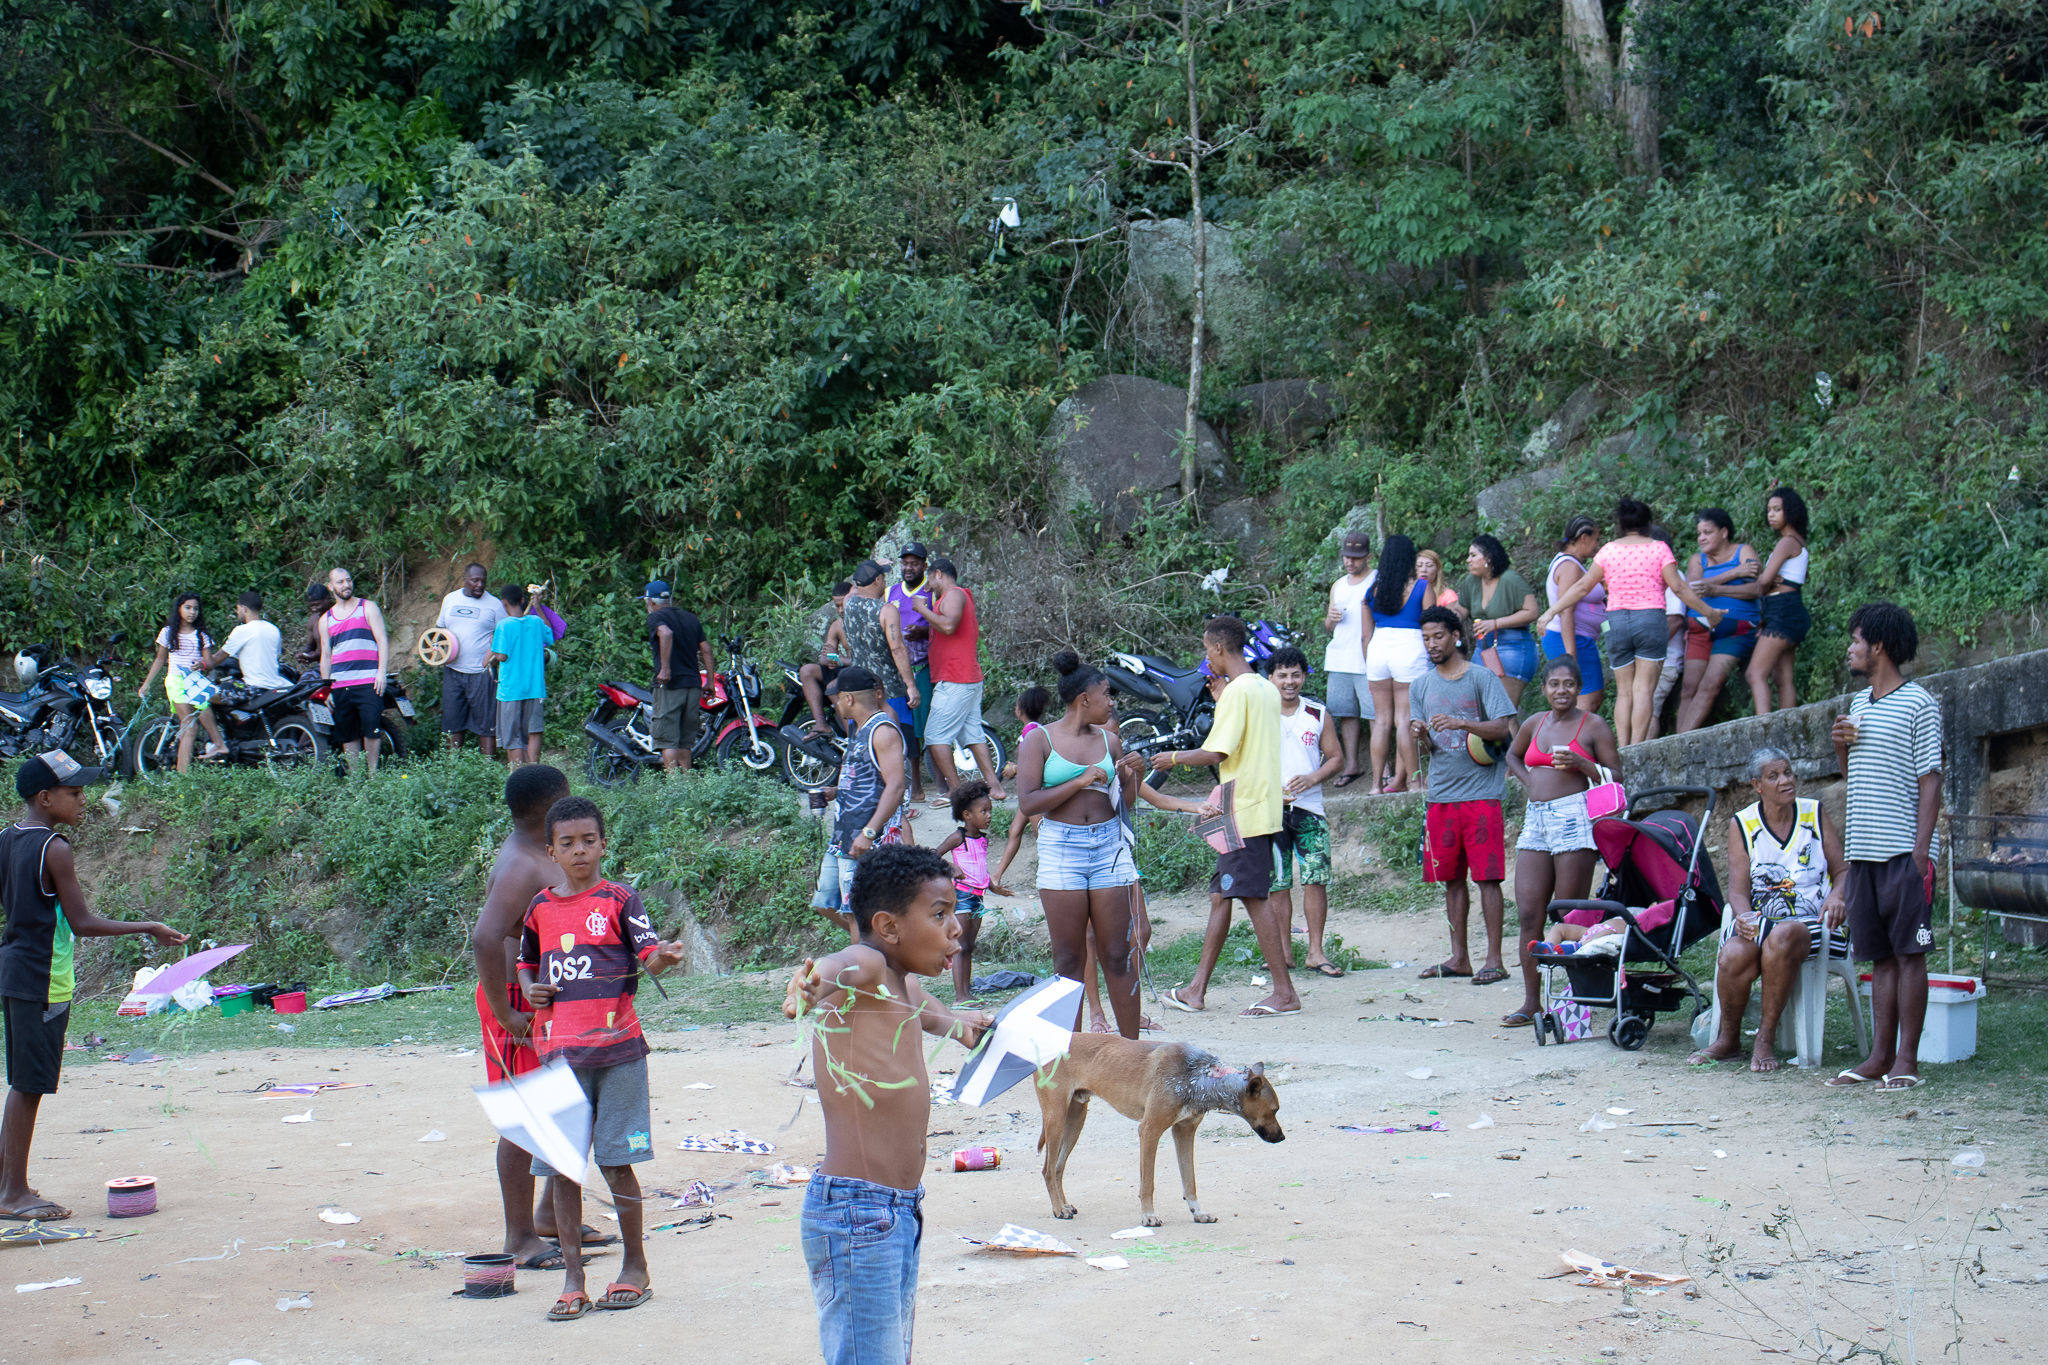 Residents of all ages enjoying the Morro do Turano Kite Festival. Photo: João Fernando